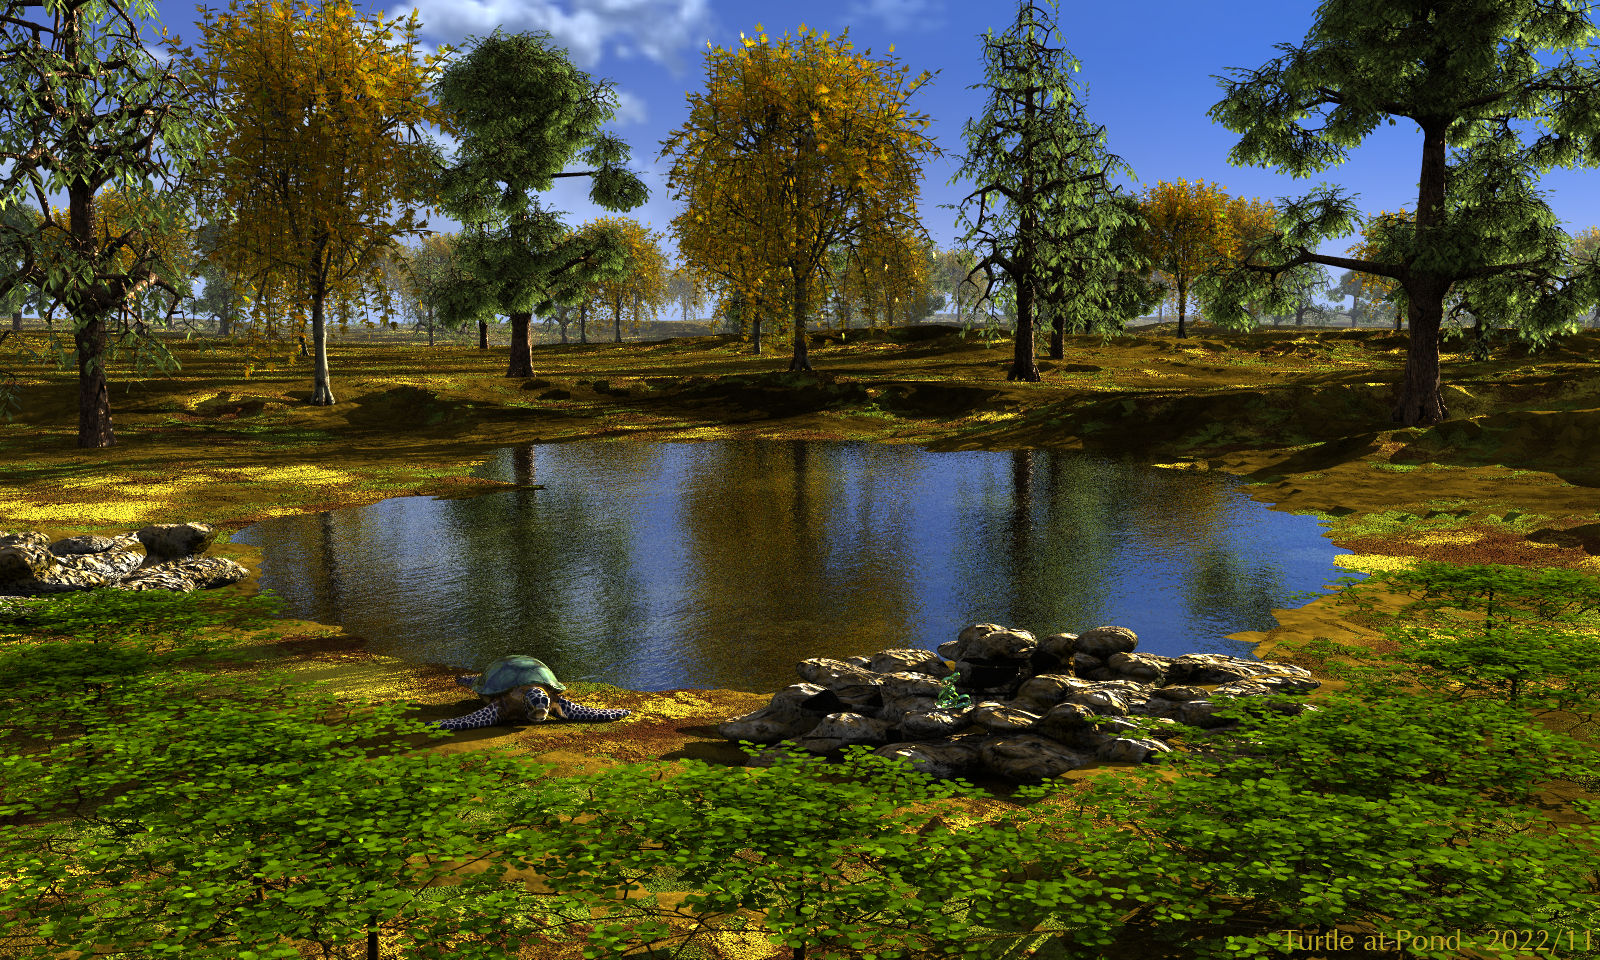 Turtle at Pond